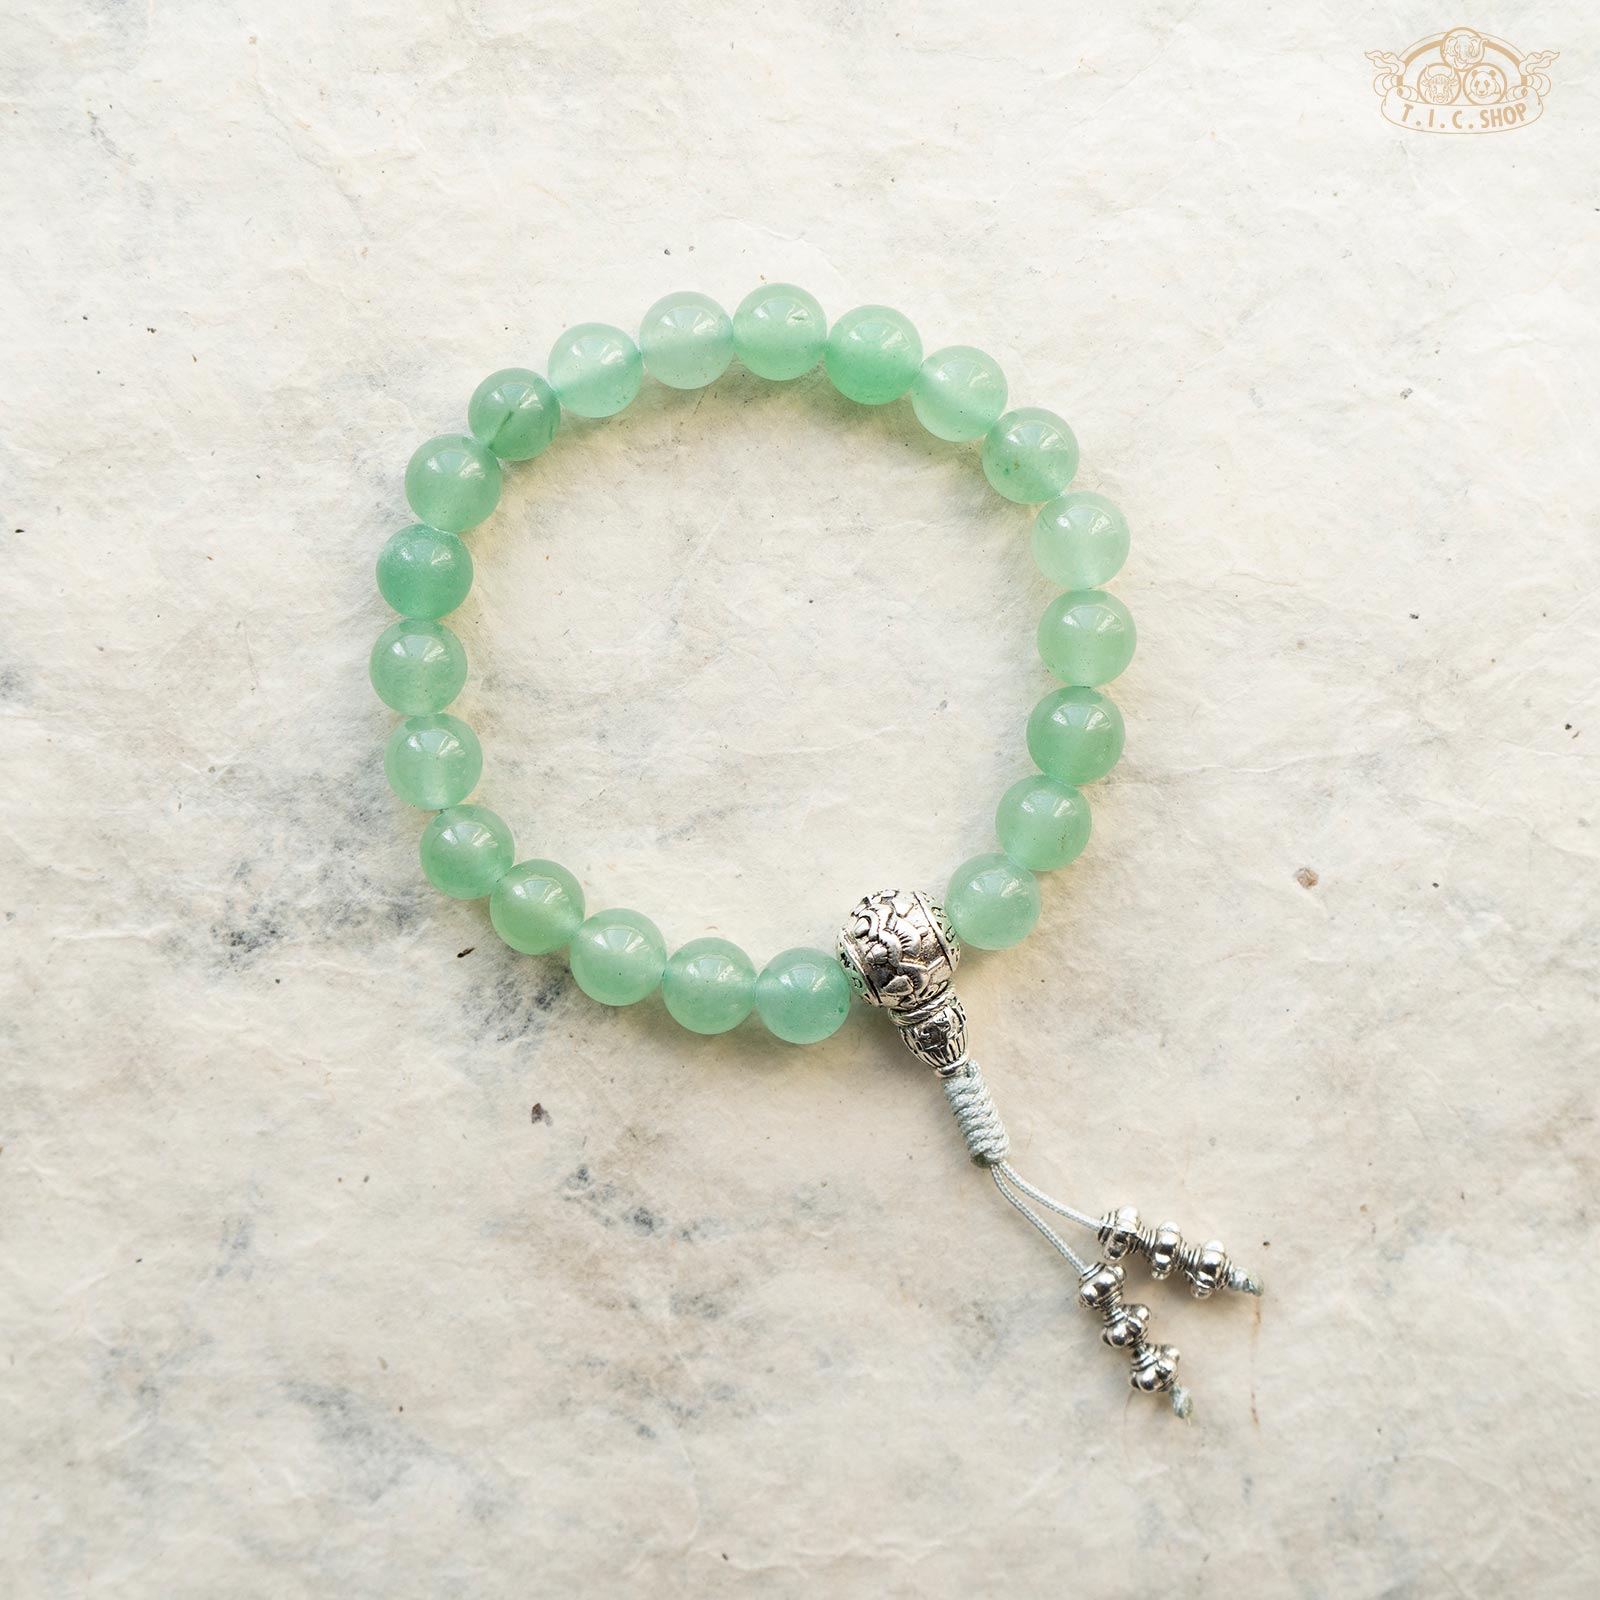 Green Jade 8mm Beads Wrist Mala Bracelet